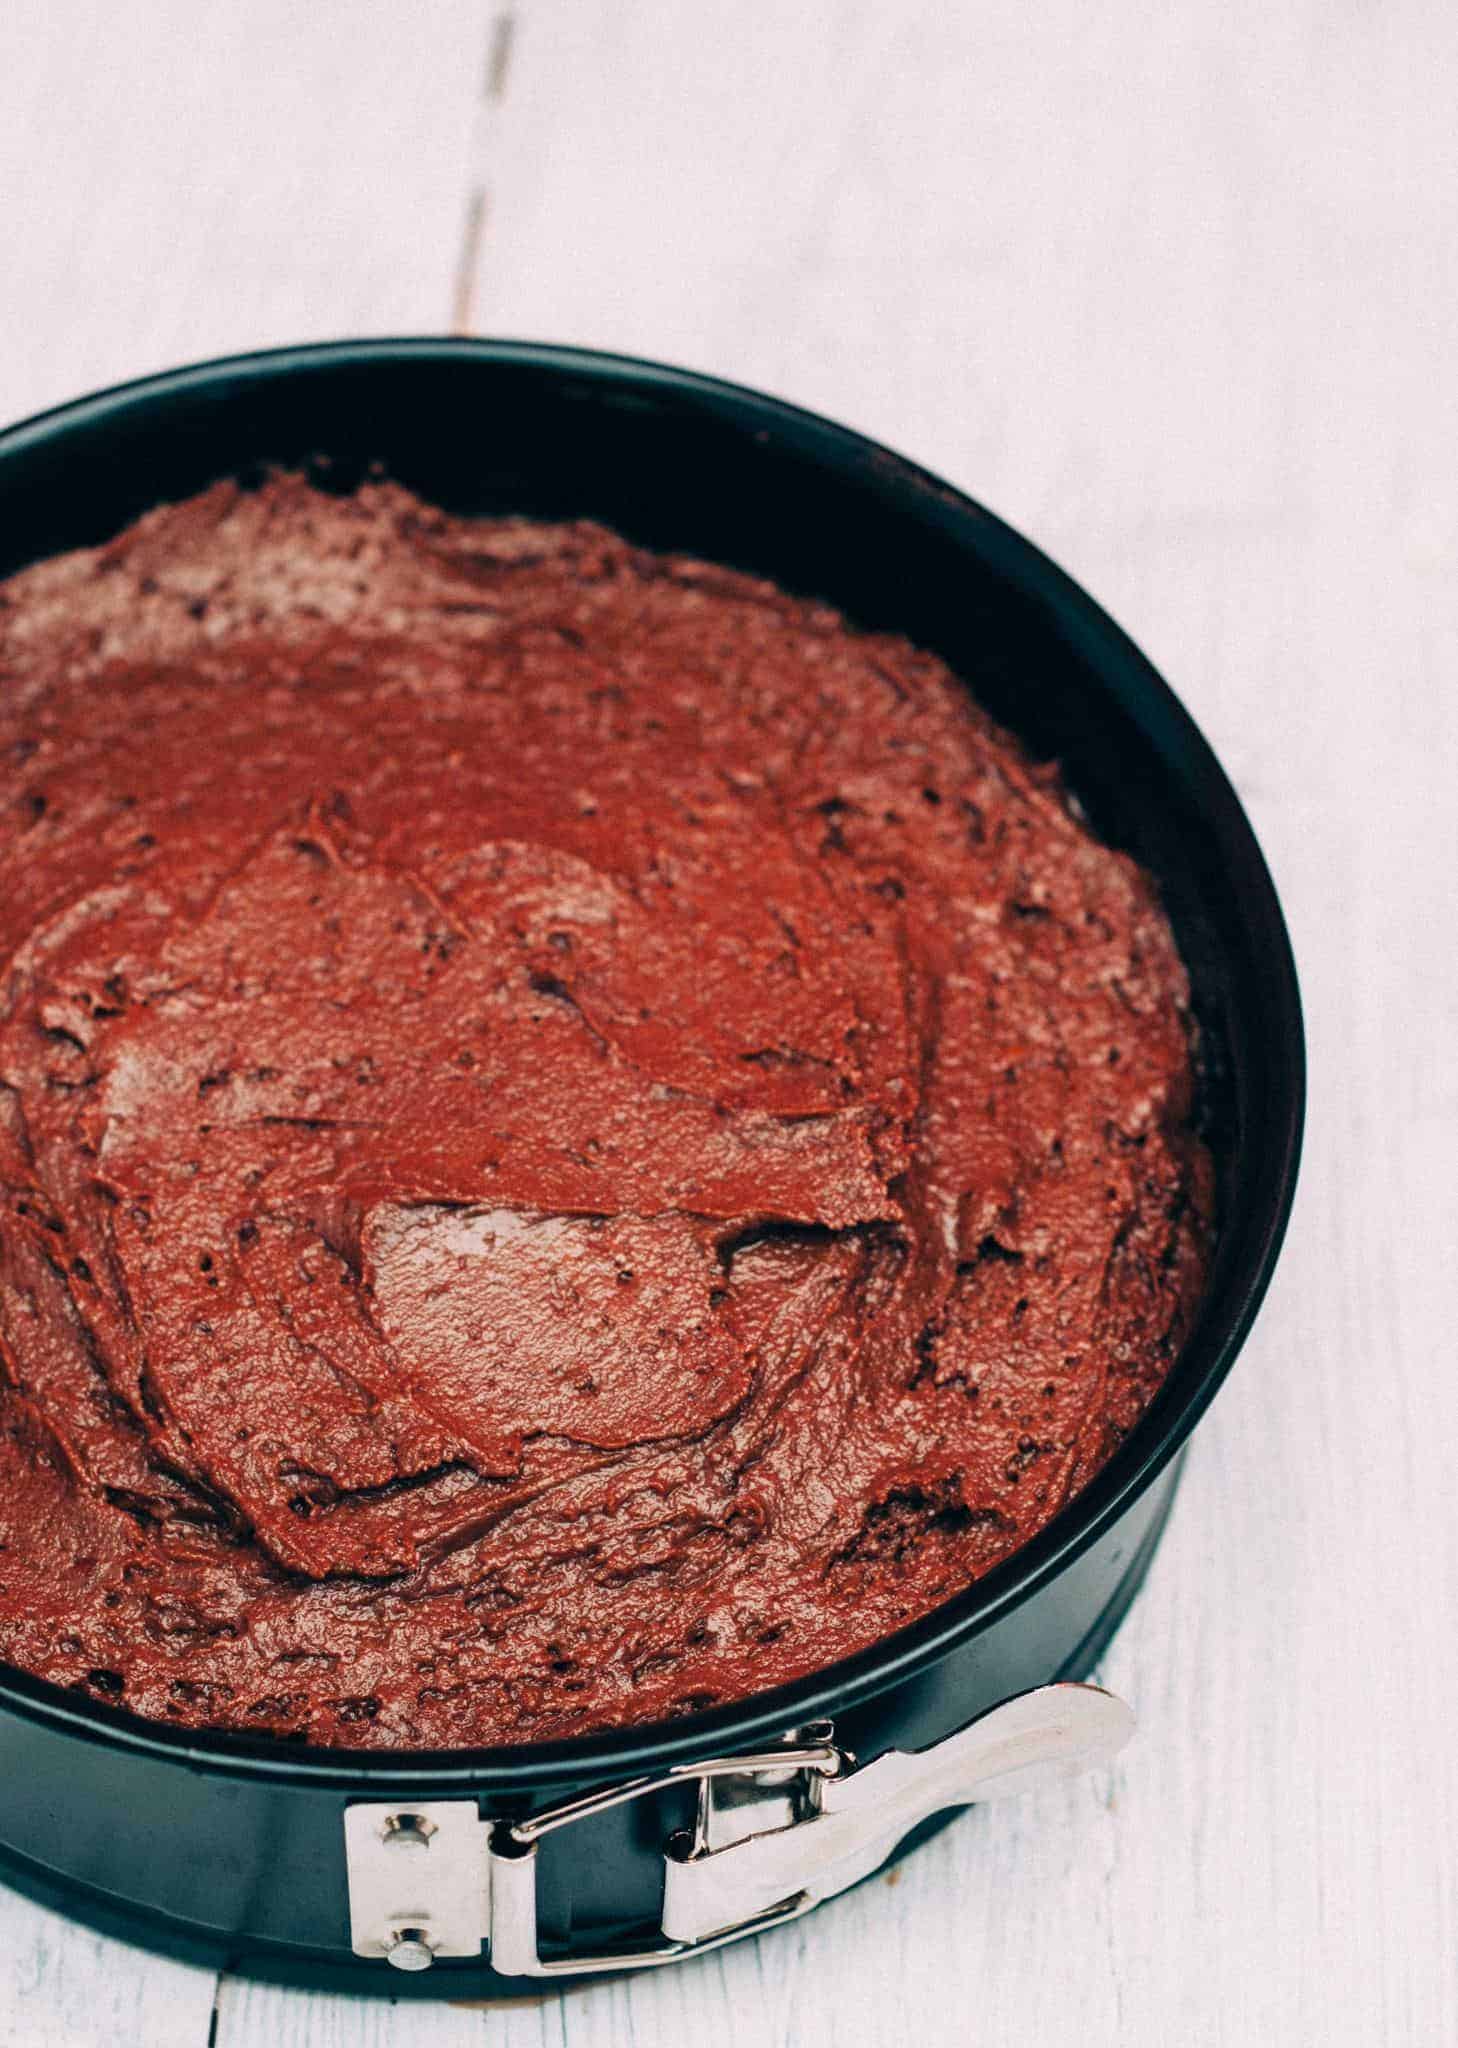 1-BOWL vegan cherry chocolate cake recipe